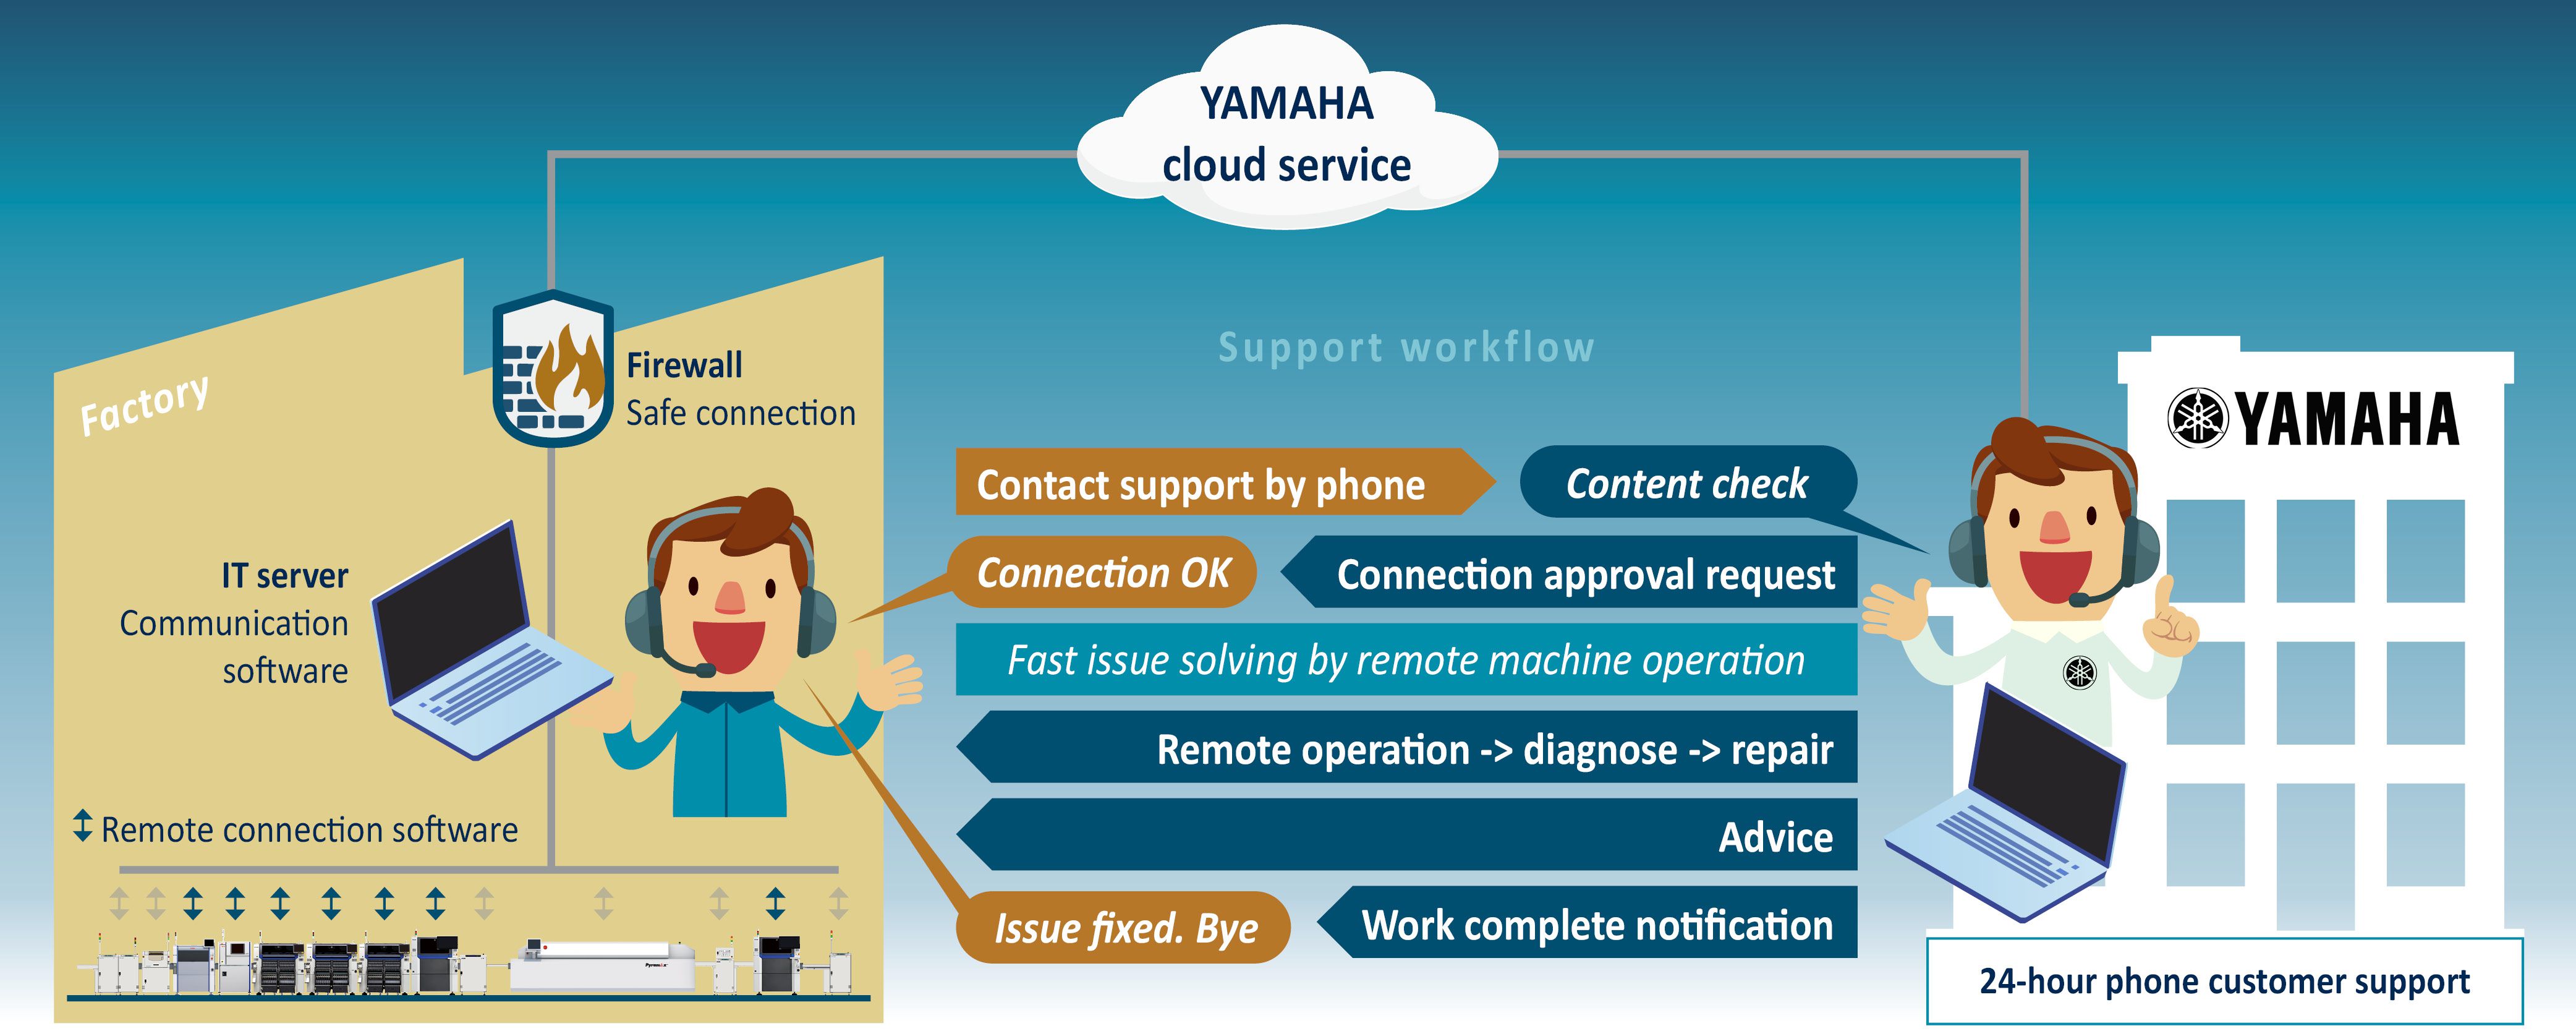 YAMAHA SMT YSUP remote support workflow illustration